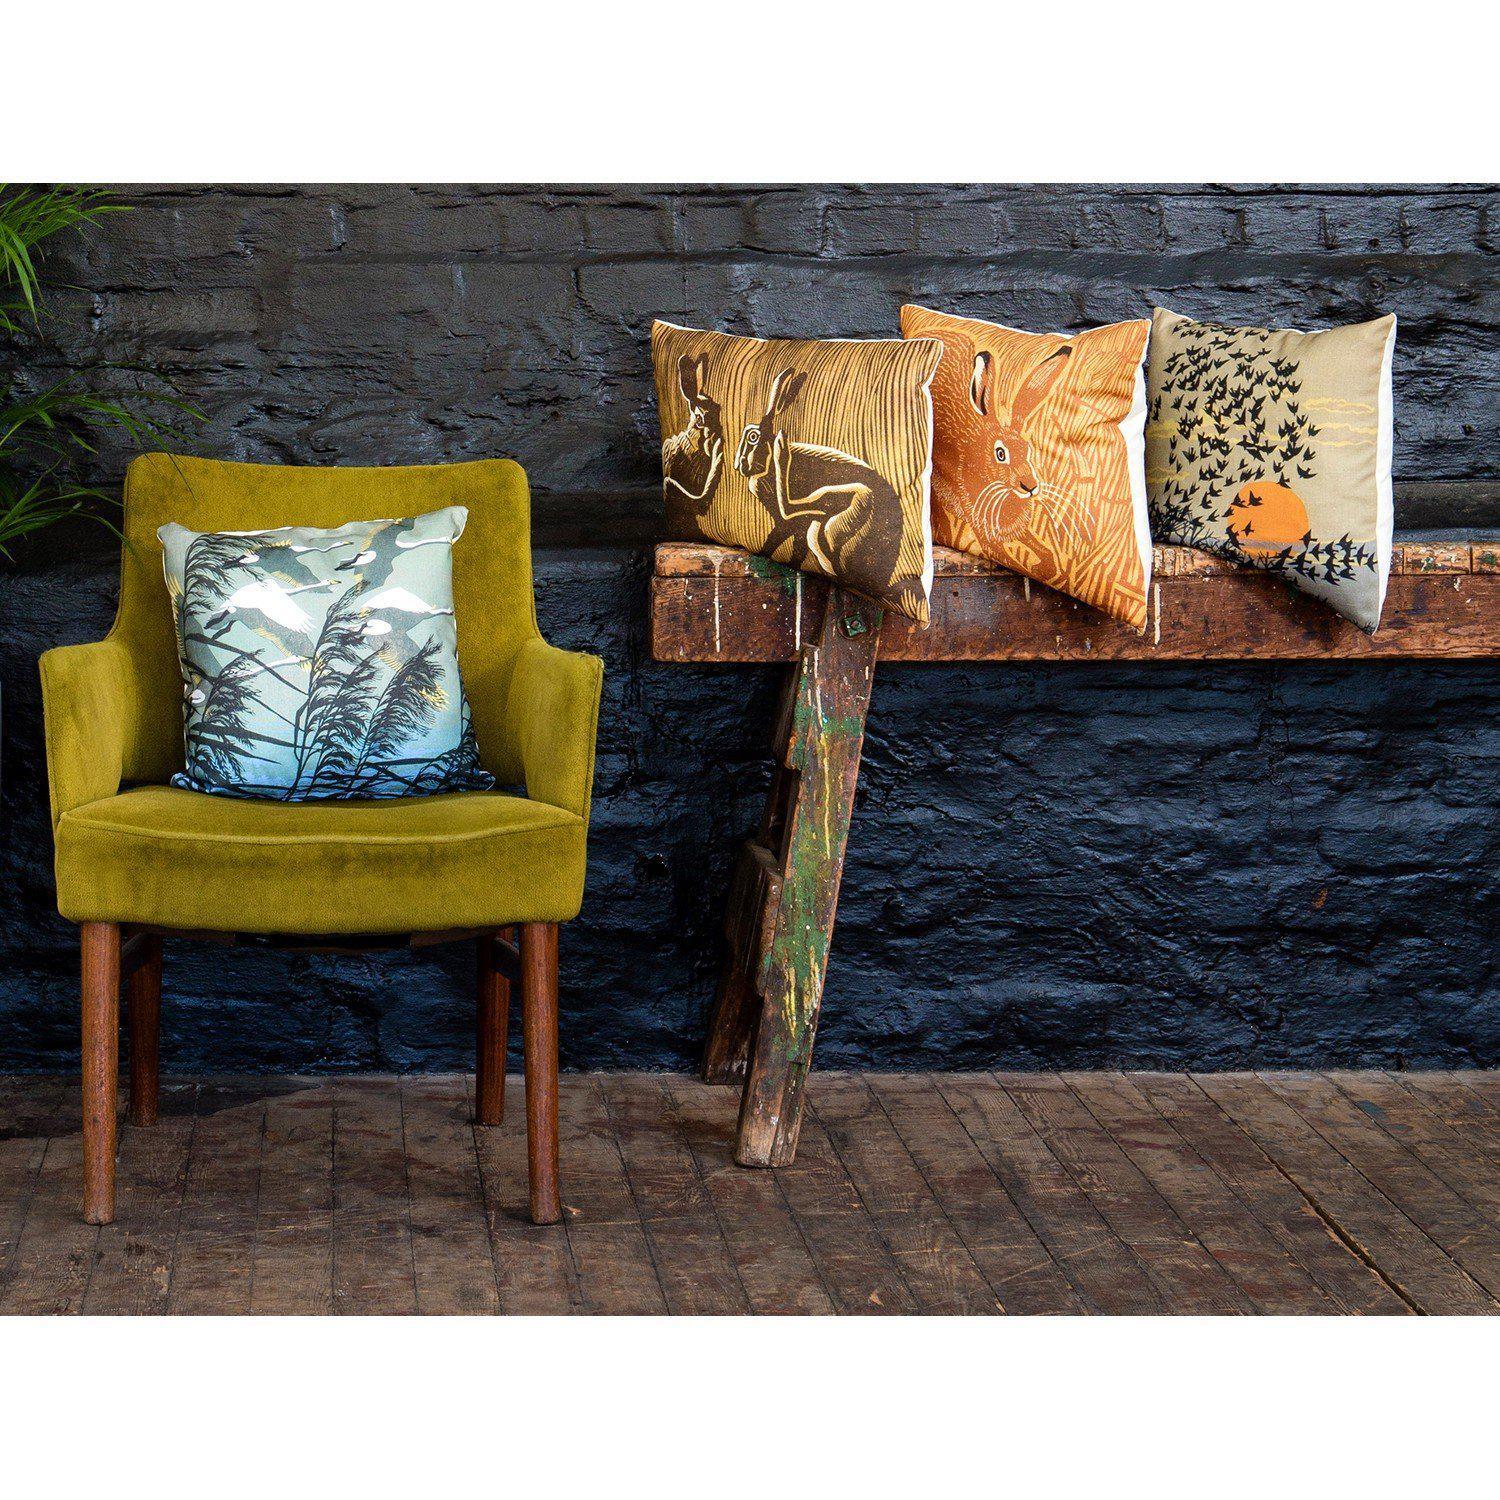 Little Owl - Robert Gillmor Cushion - Handmade Cushions UK - WeLoveCushions